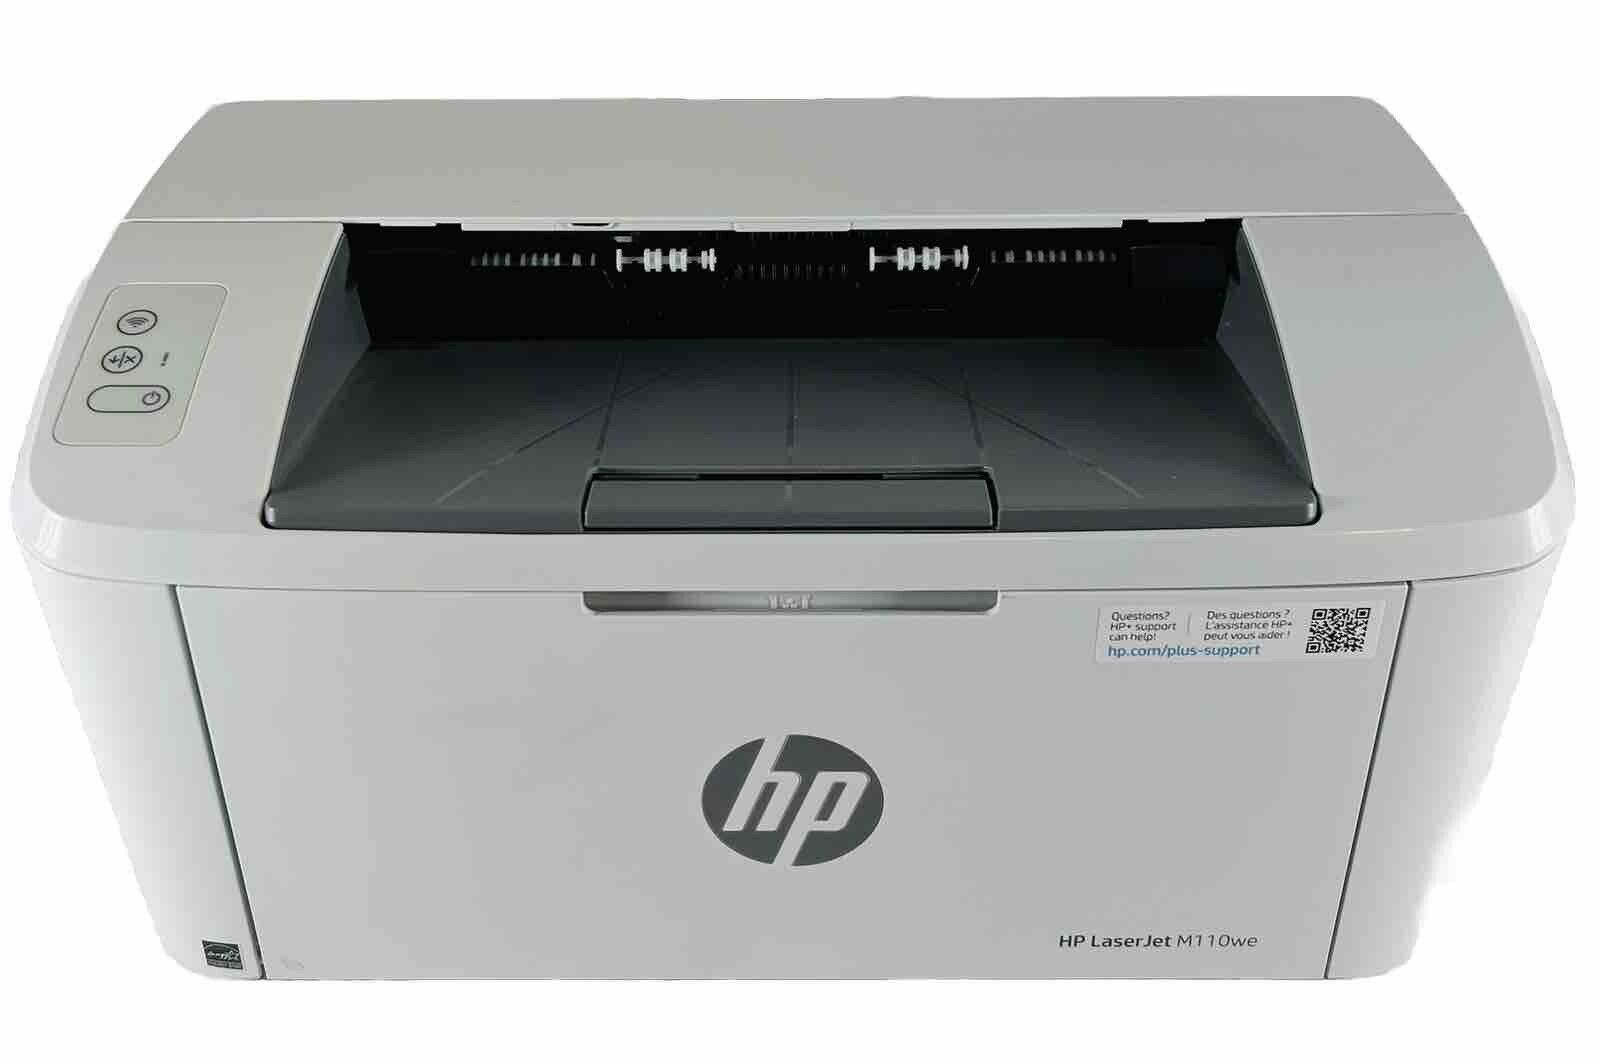 HP LaserJet M110we Wireless Black And White Printer With Toner